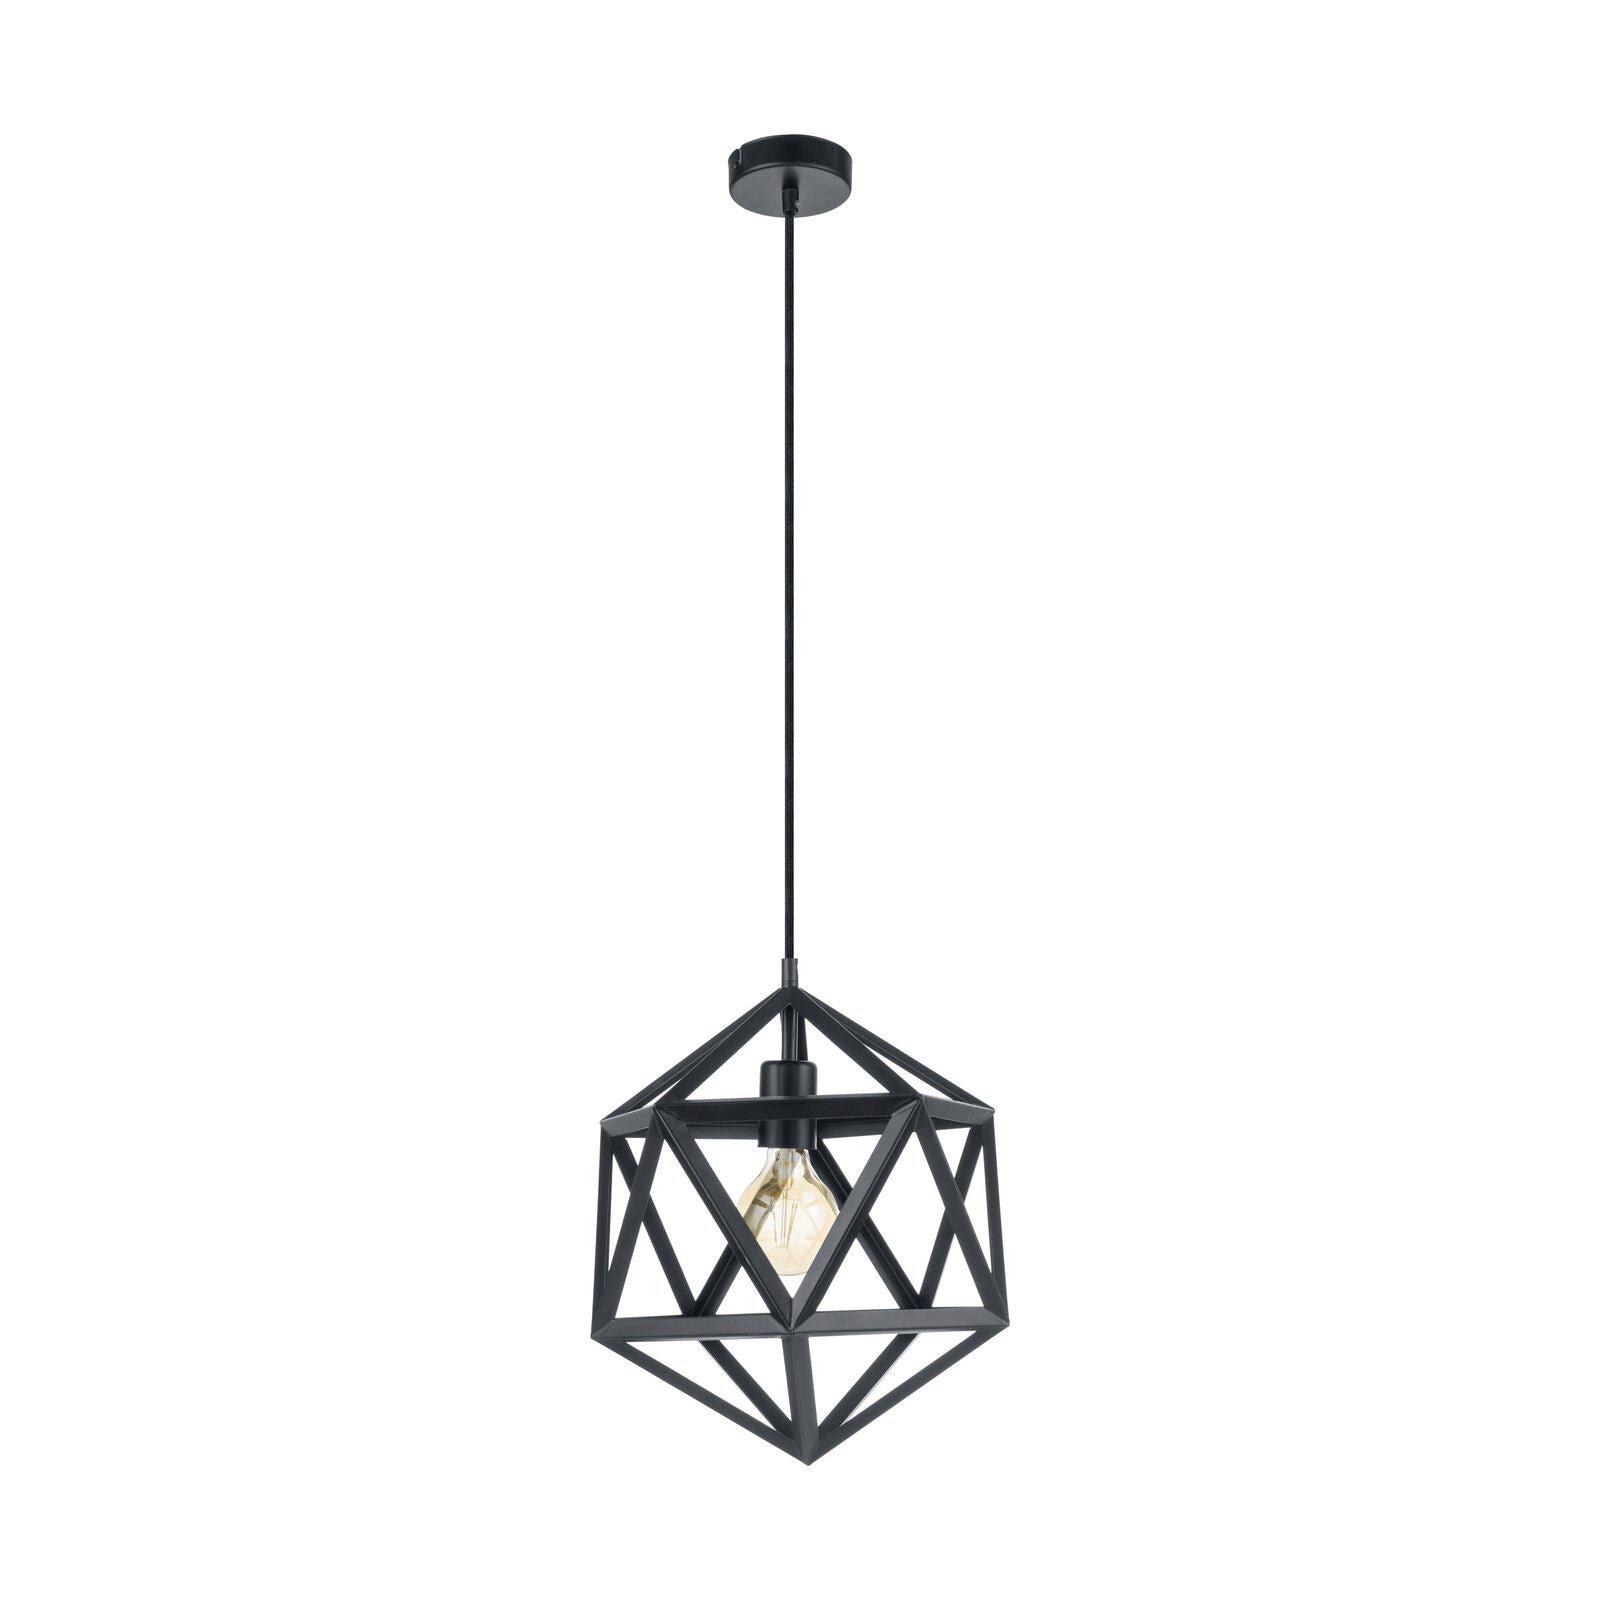 Hanging Ceiling Pendant Light Black Prism 1 x 60W E27 Modern Feature Lamp